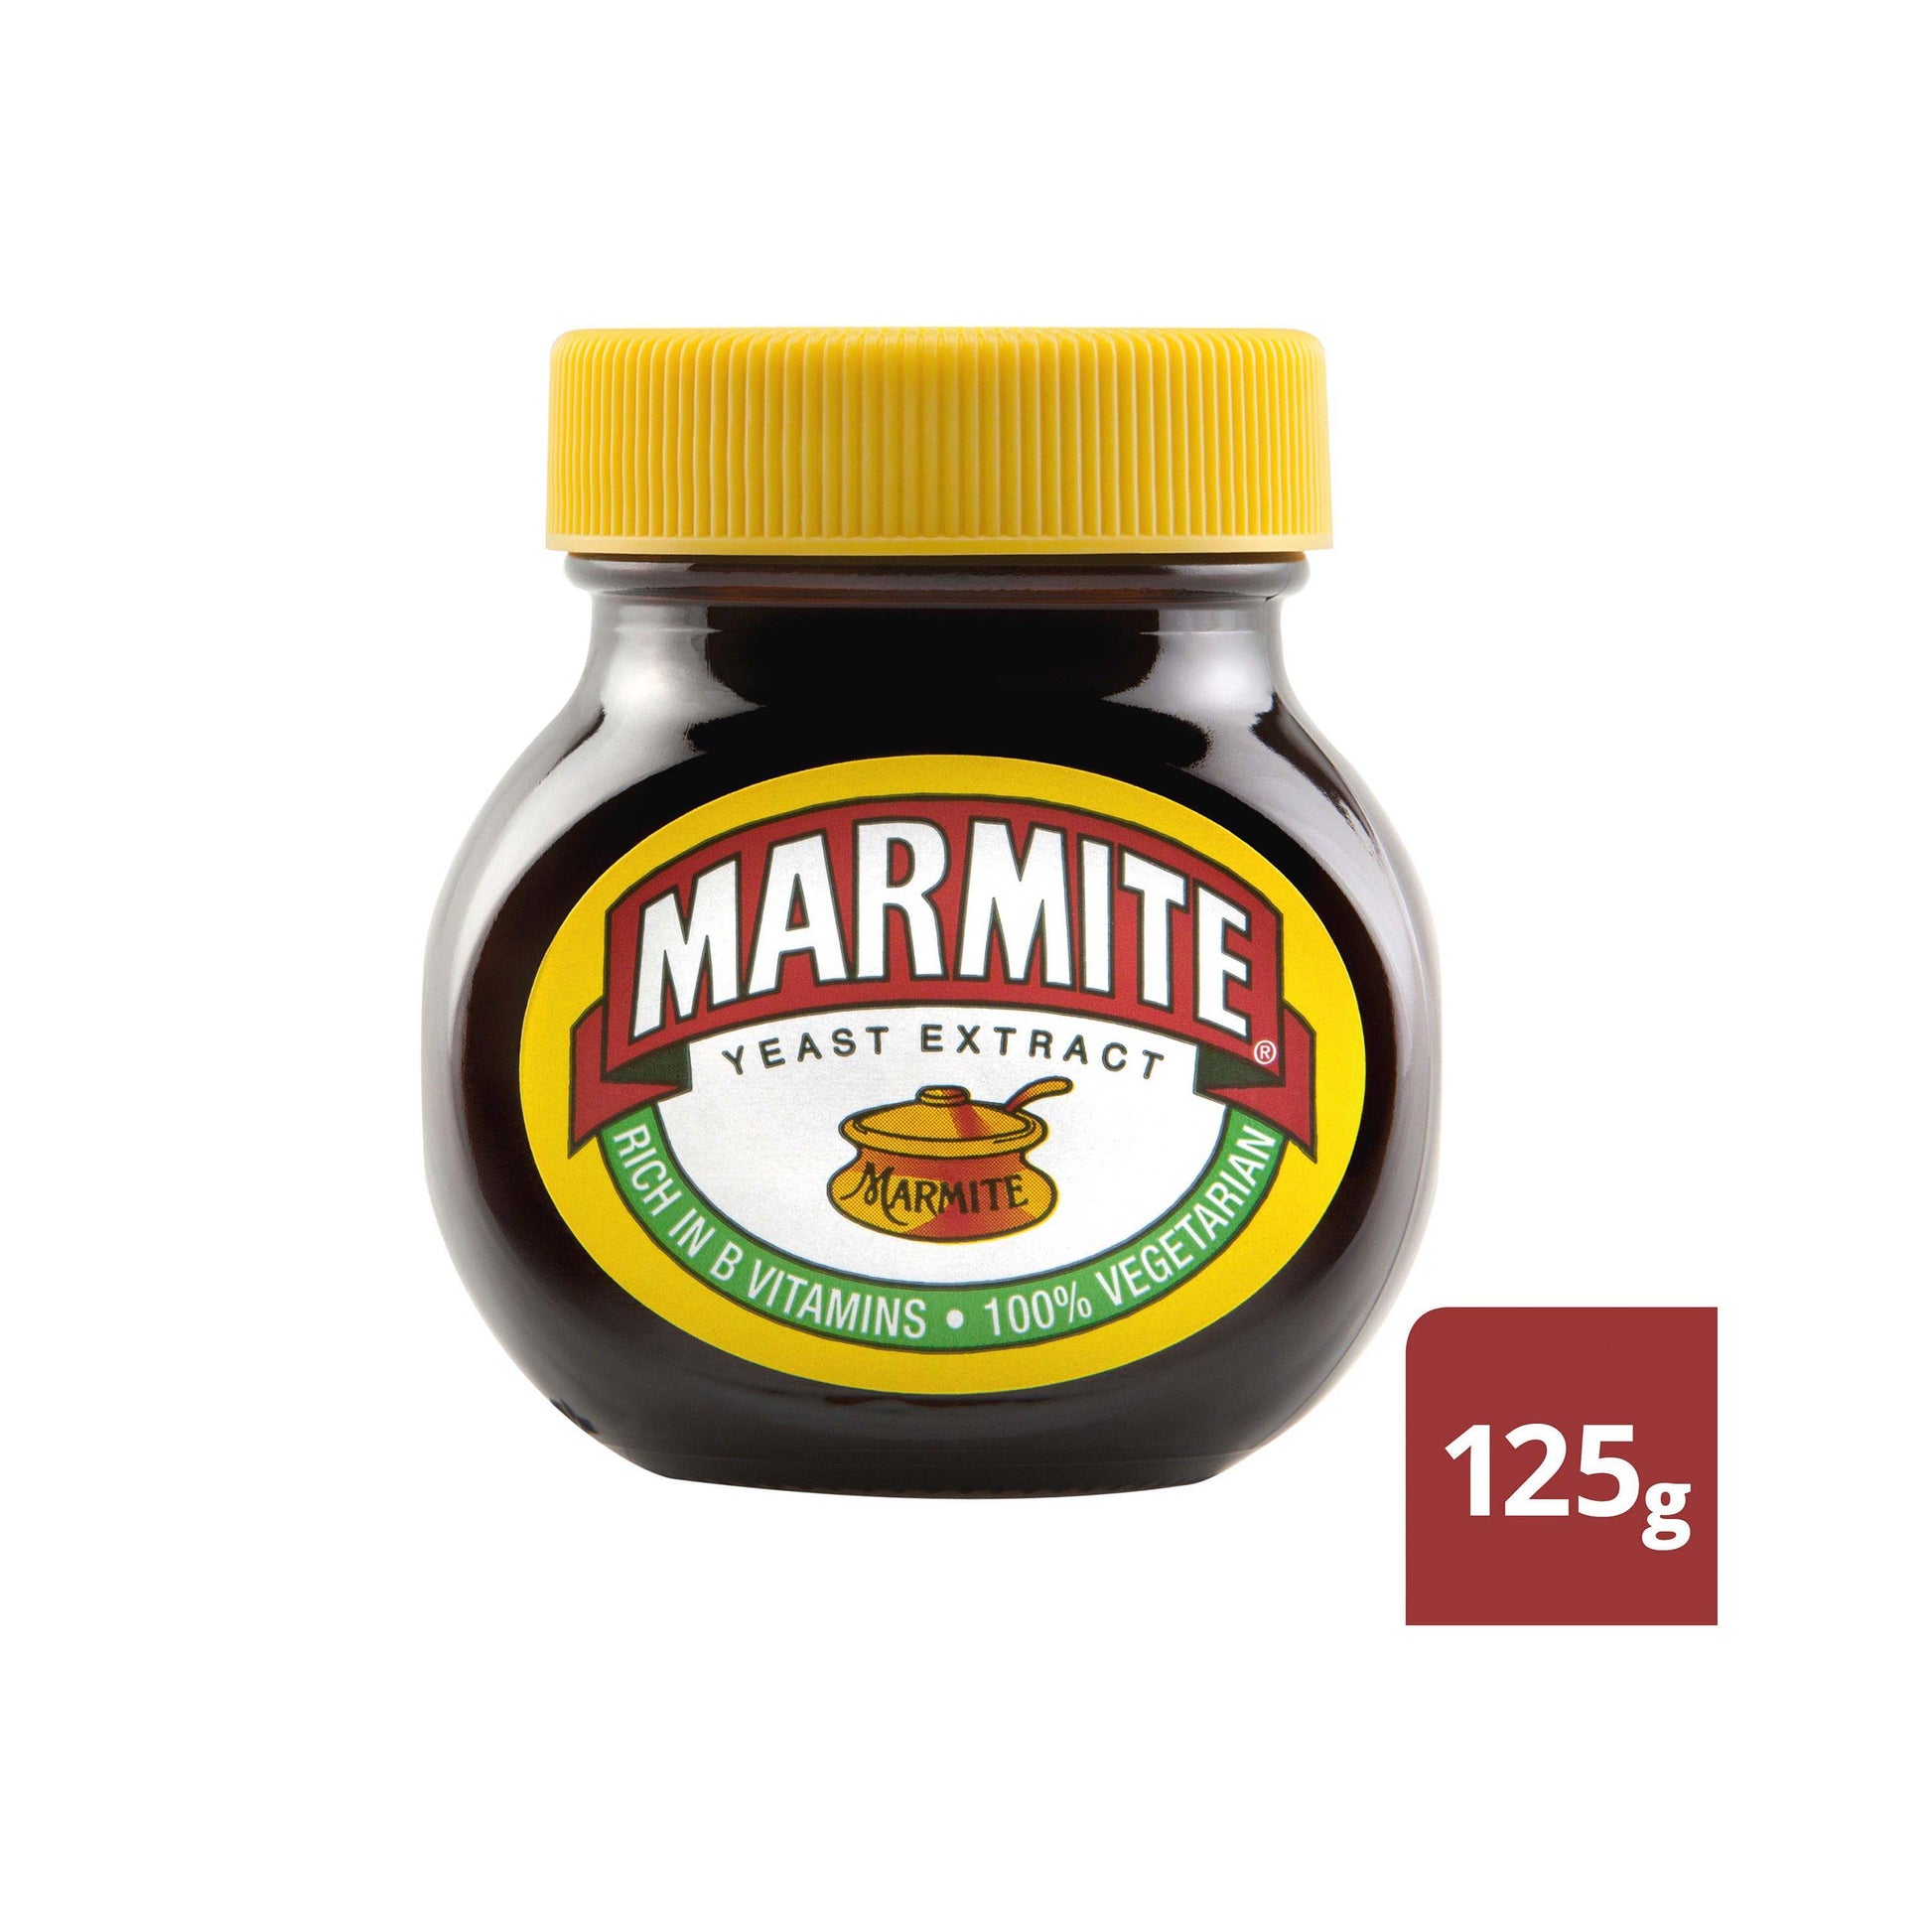 Marmite Classic Yeast Extract Spread - 125g - Classic British Spread